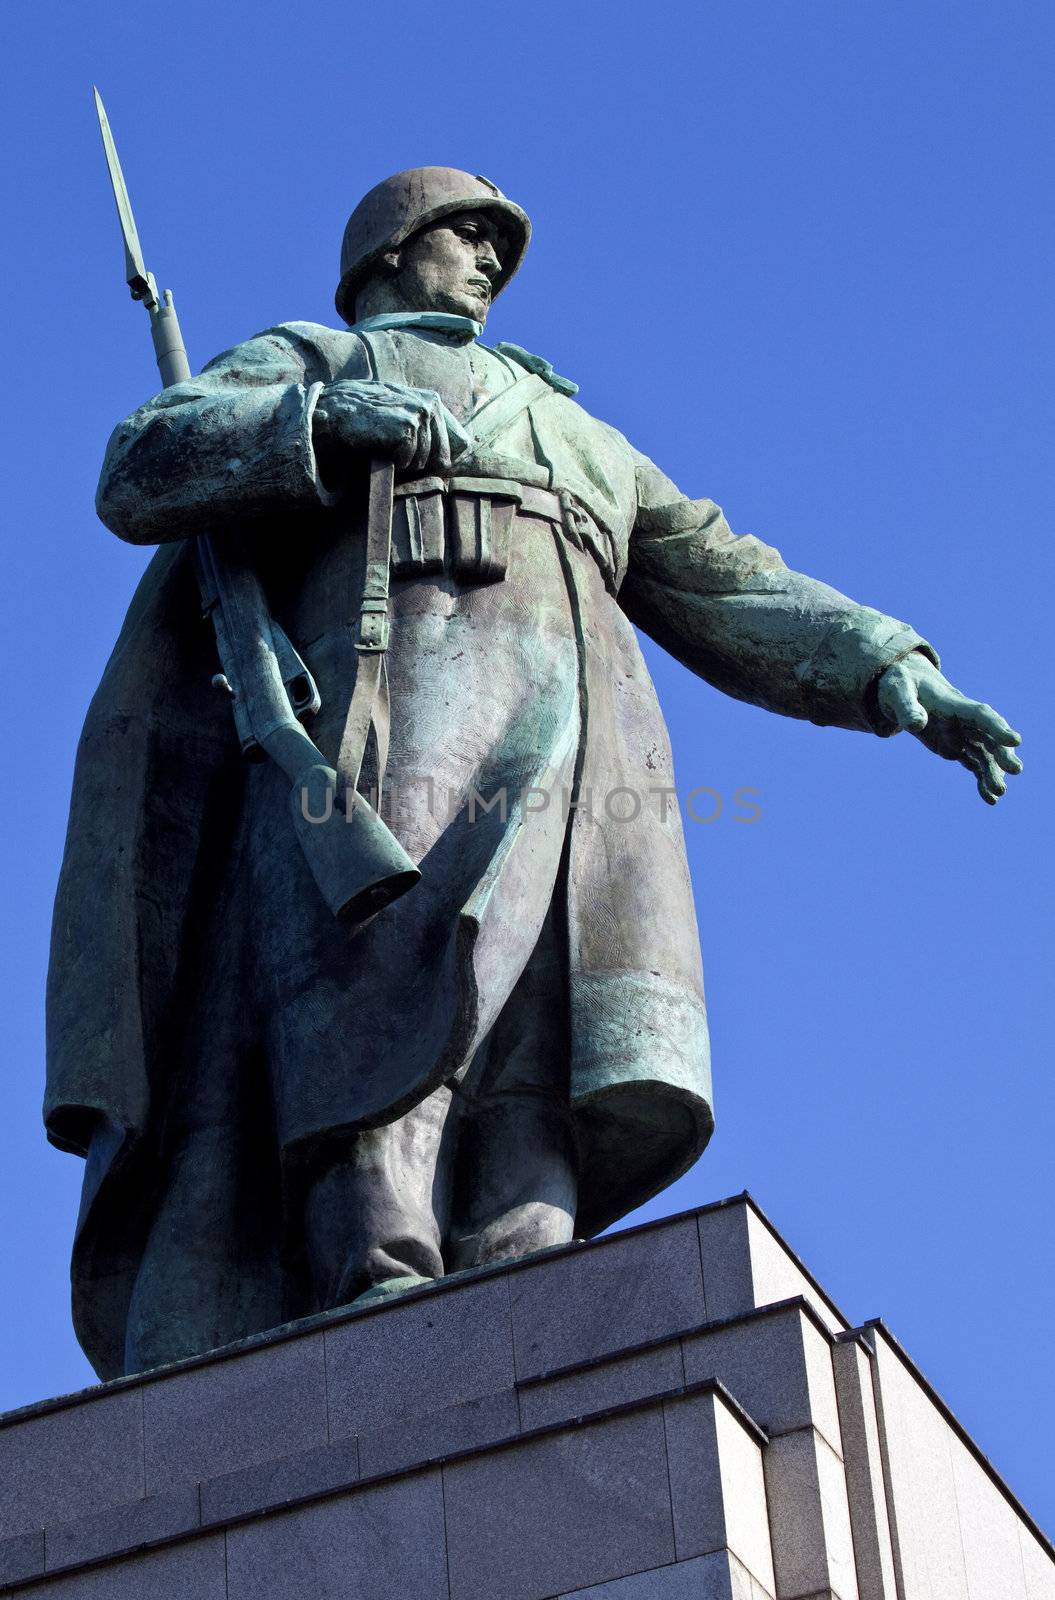 Soviet War Memorial in Berlin by chrisdorney